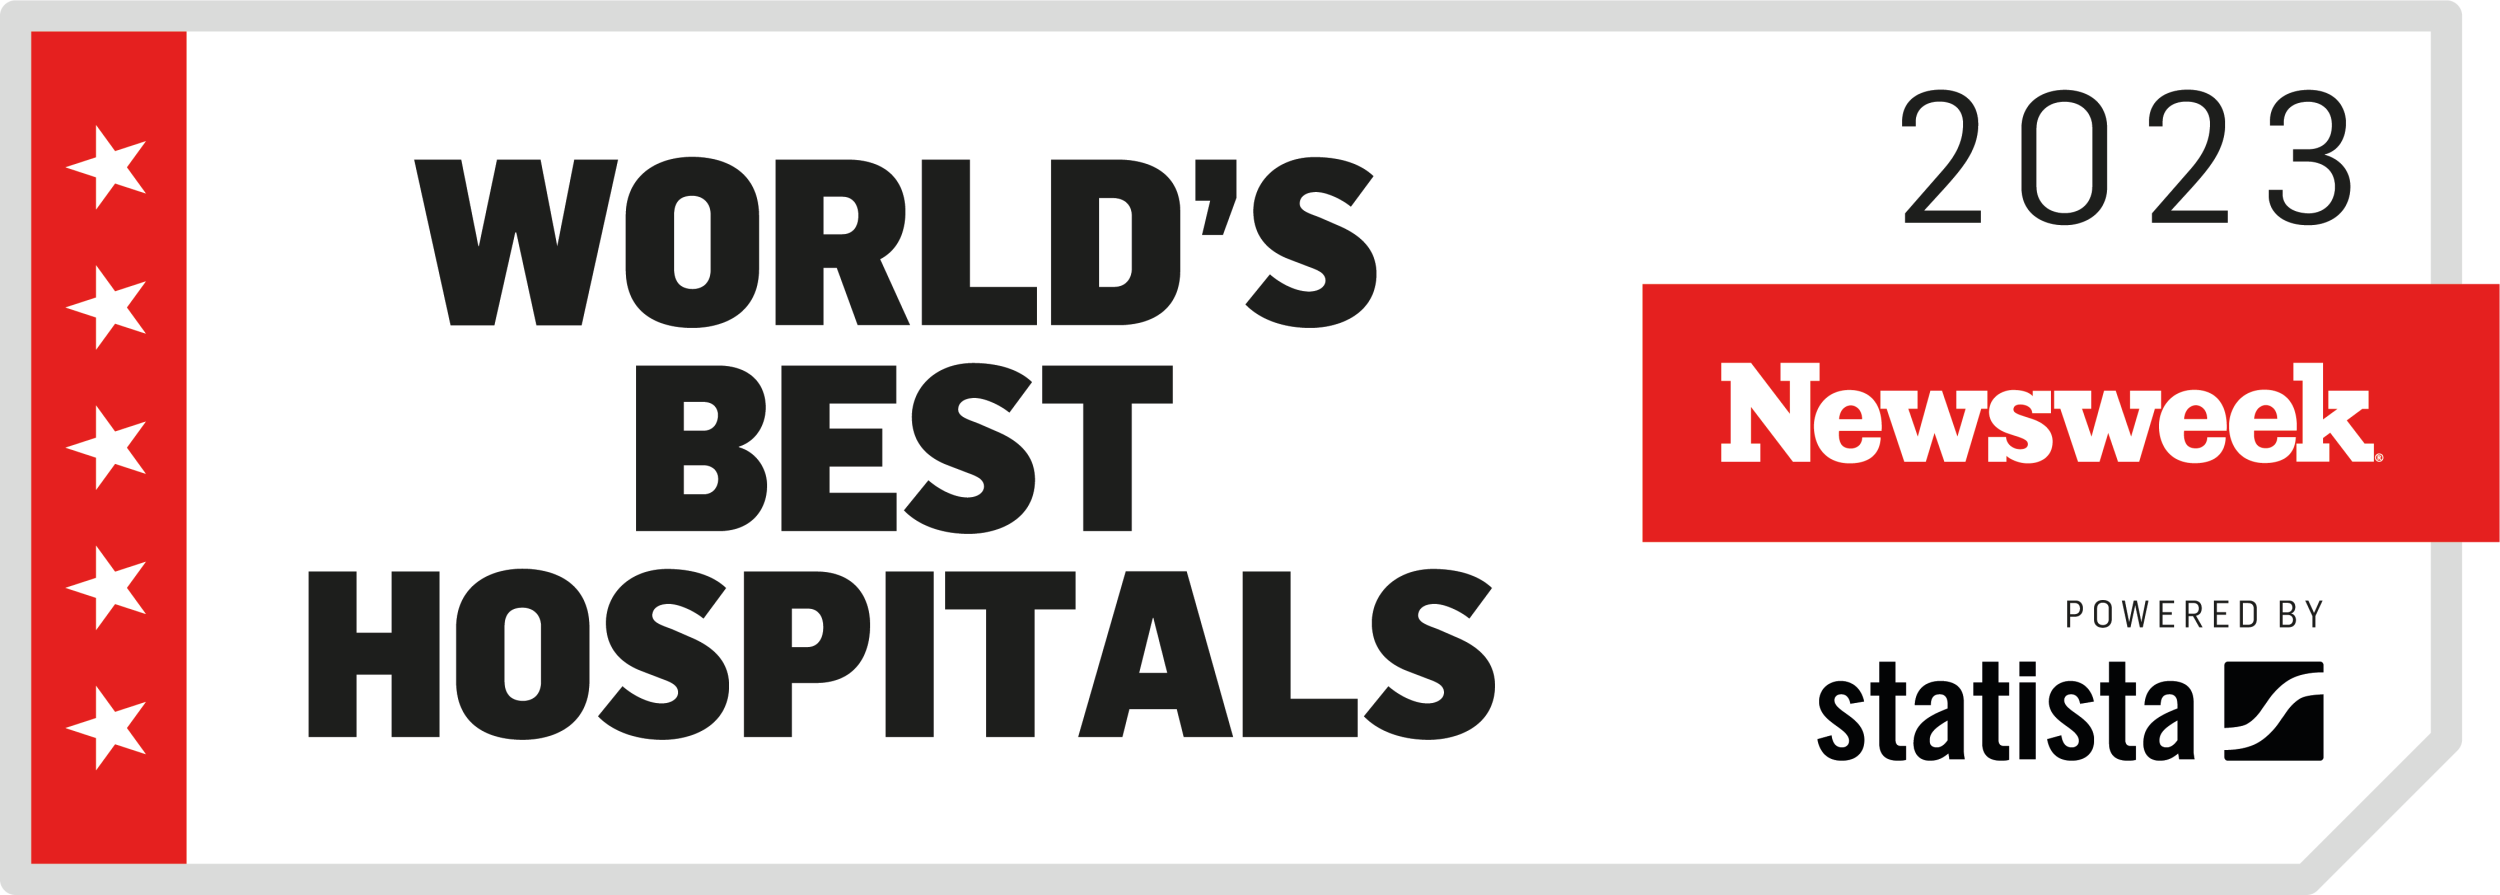 World's Best Hospitals 2023